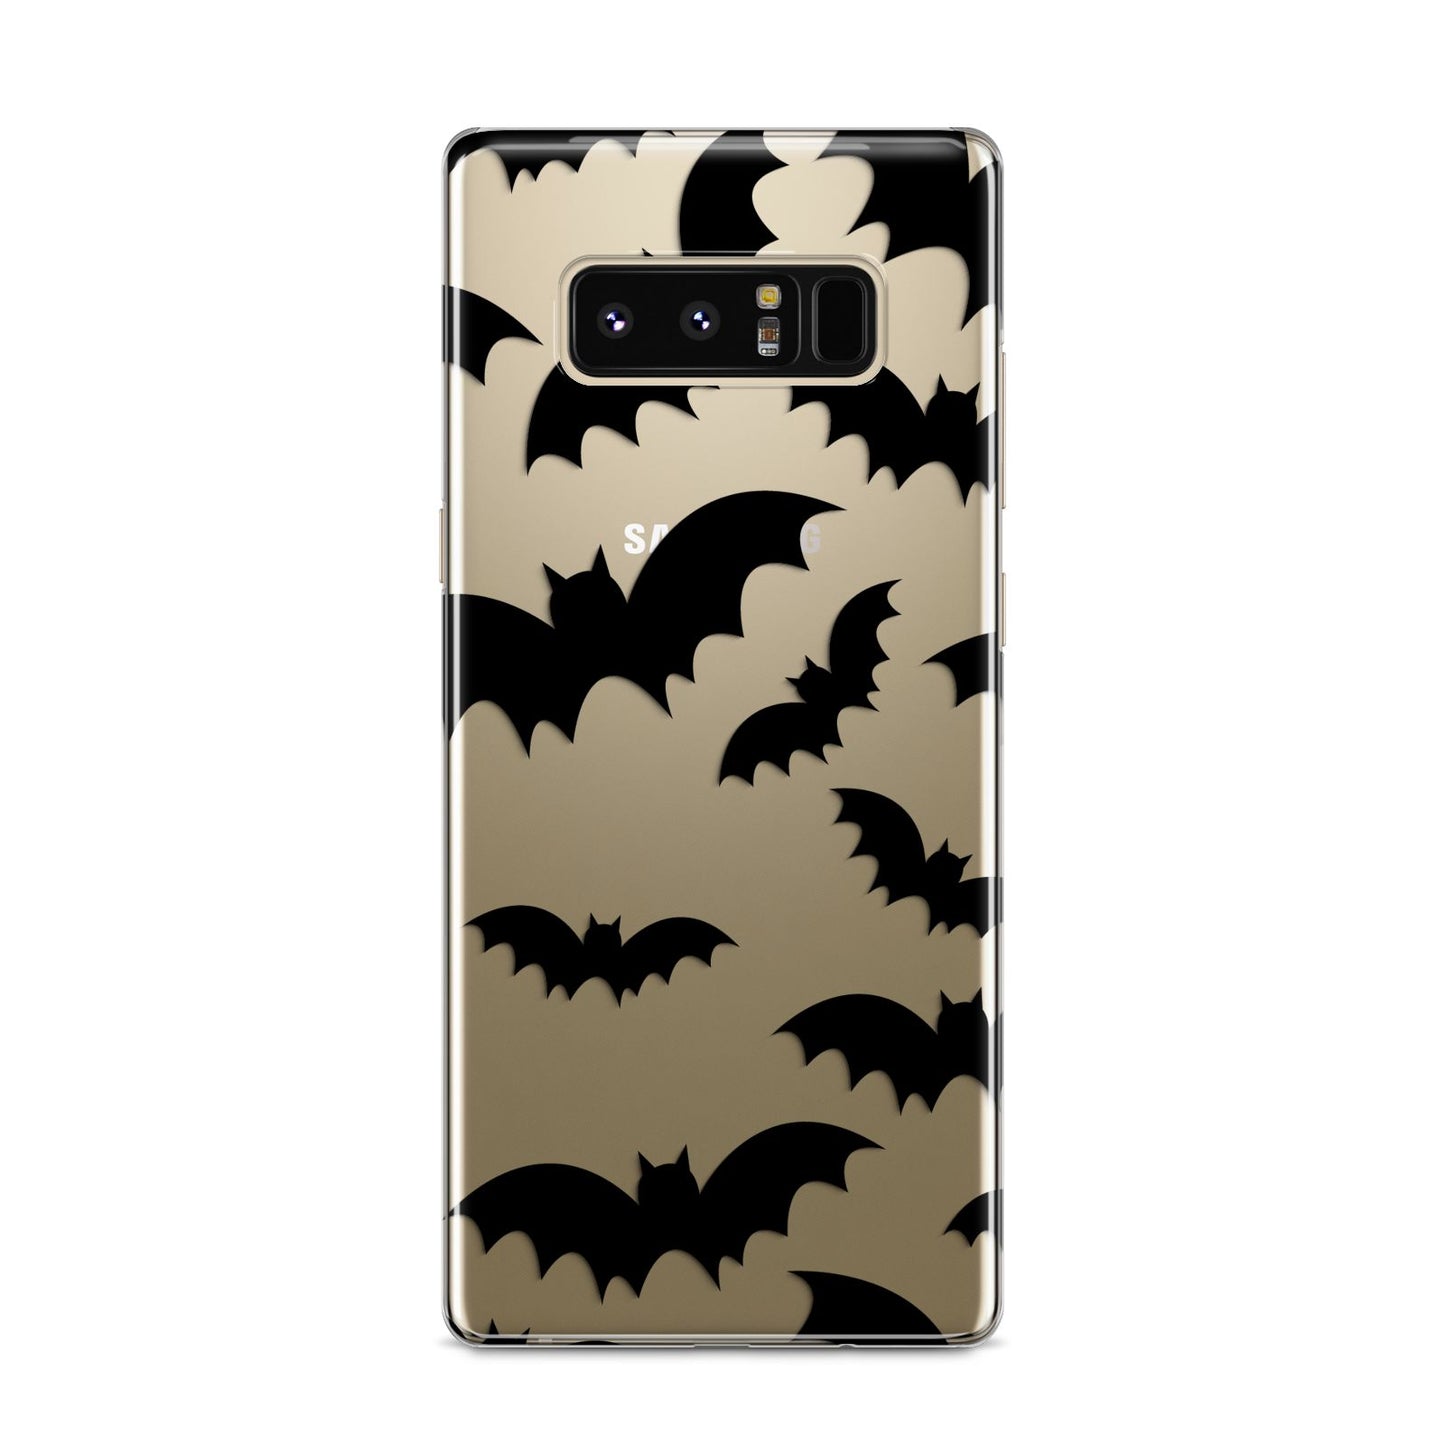 Bat Halloween Print Samsung Galaxy S8 Case